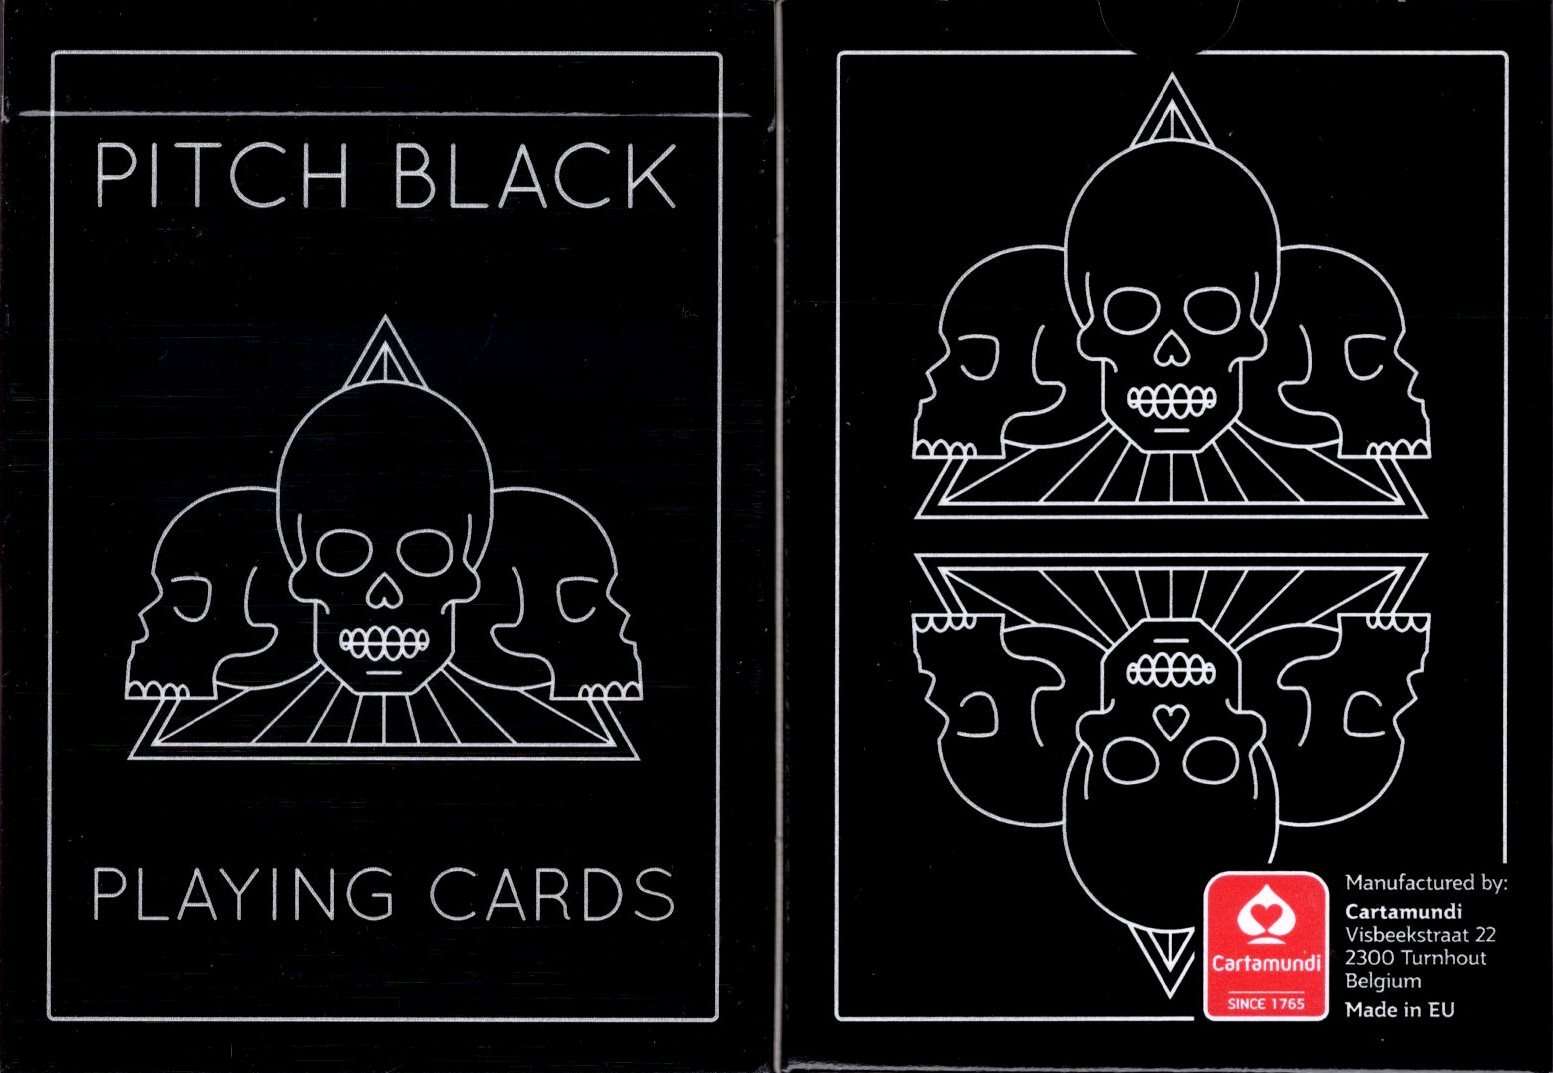 PlayingCardDecks.com-Pitch Black v2 Playing Cards Cartamundi